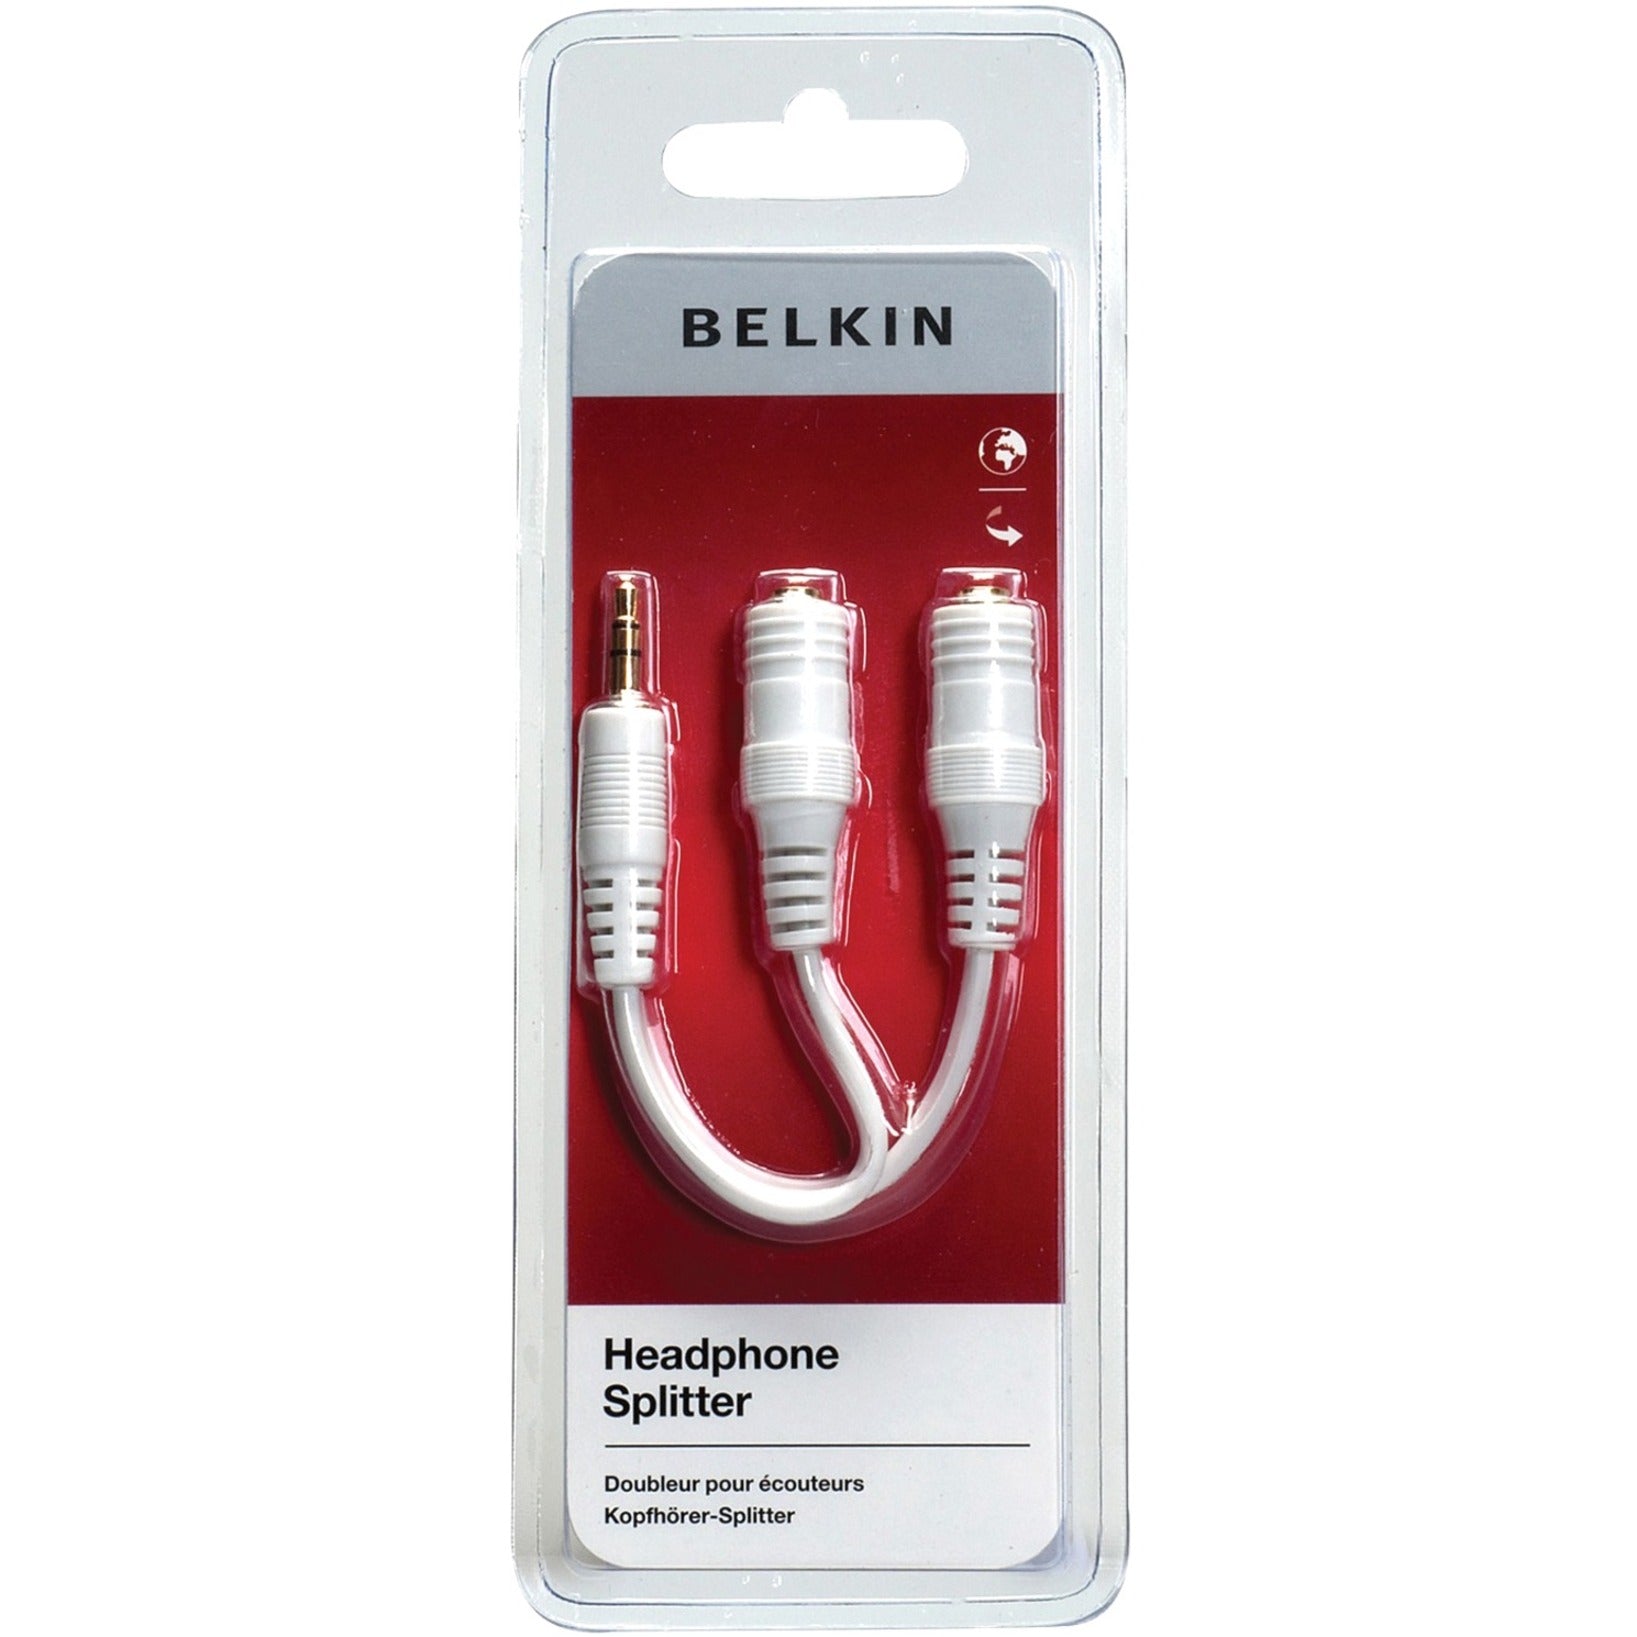 Belkin F8V234 Speaker and Headphone Splitter, 2-Way Audio Cable, Black